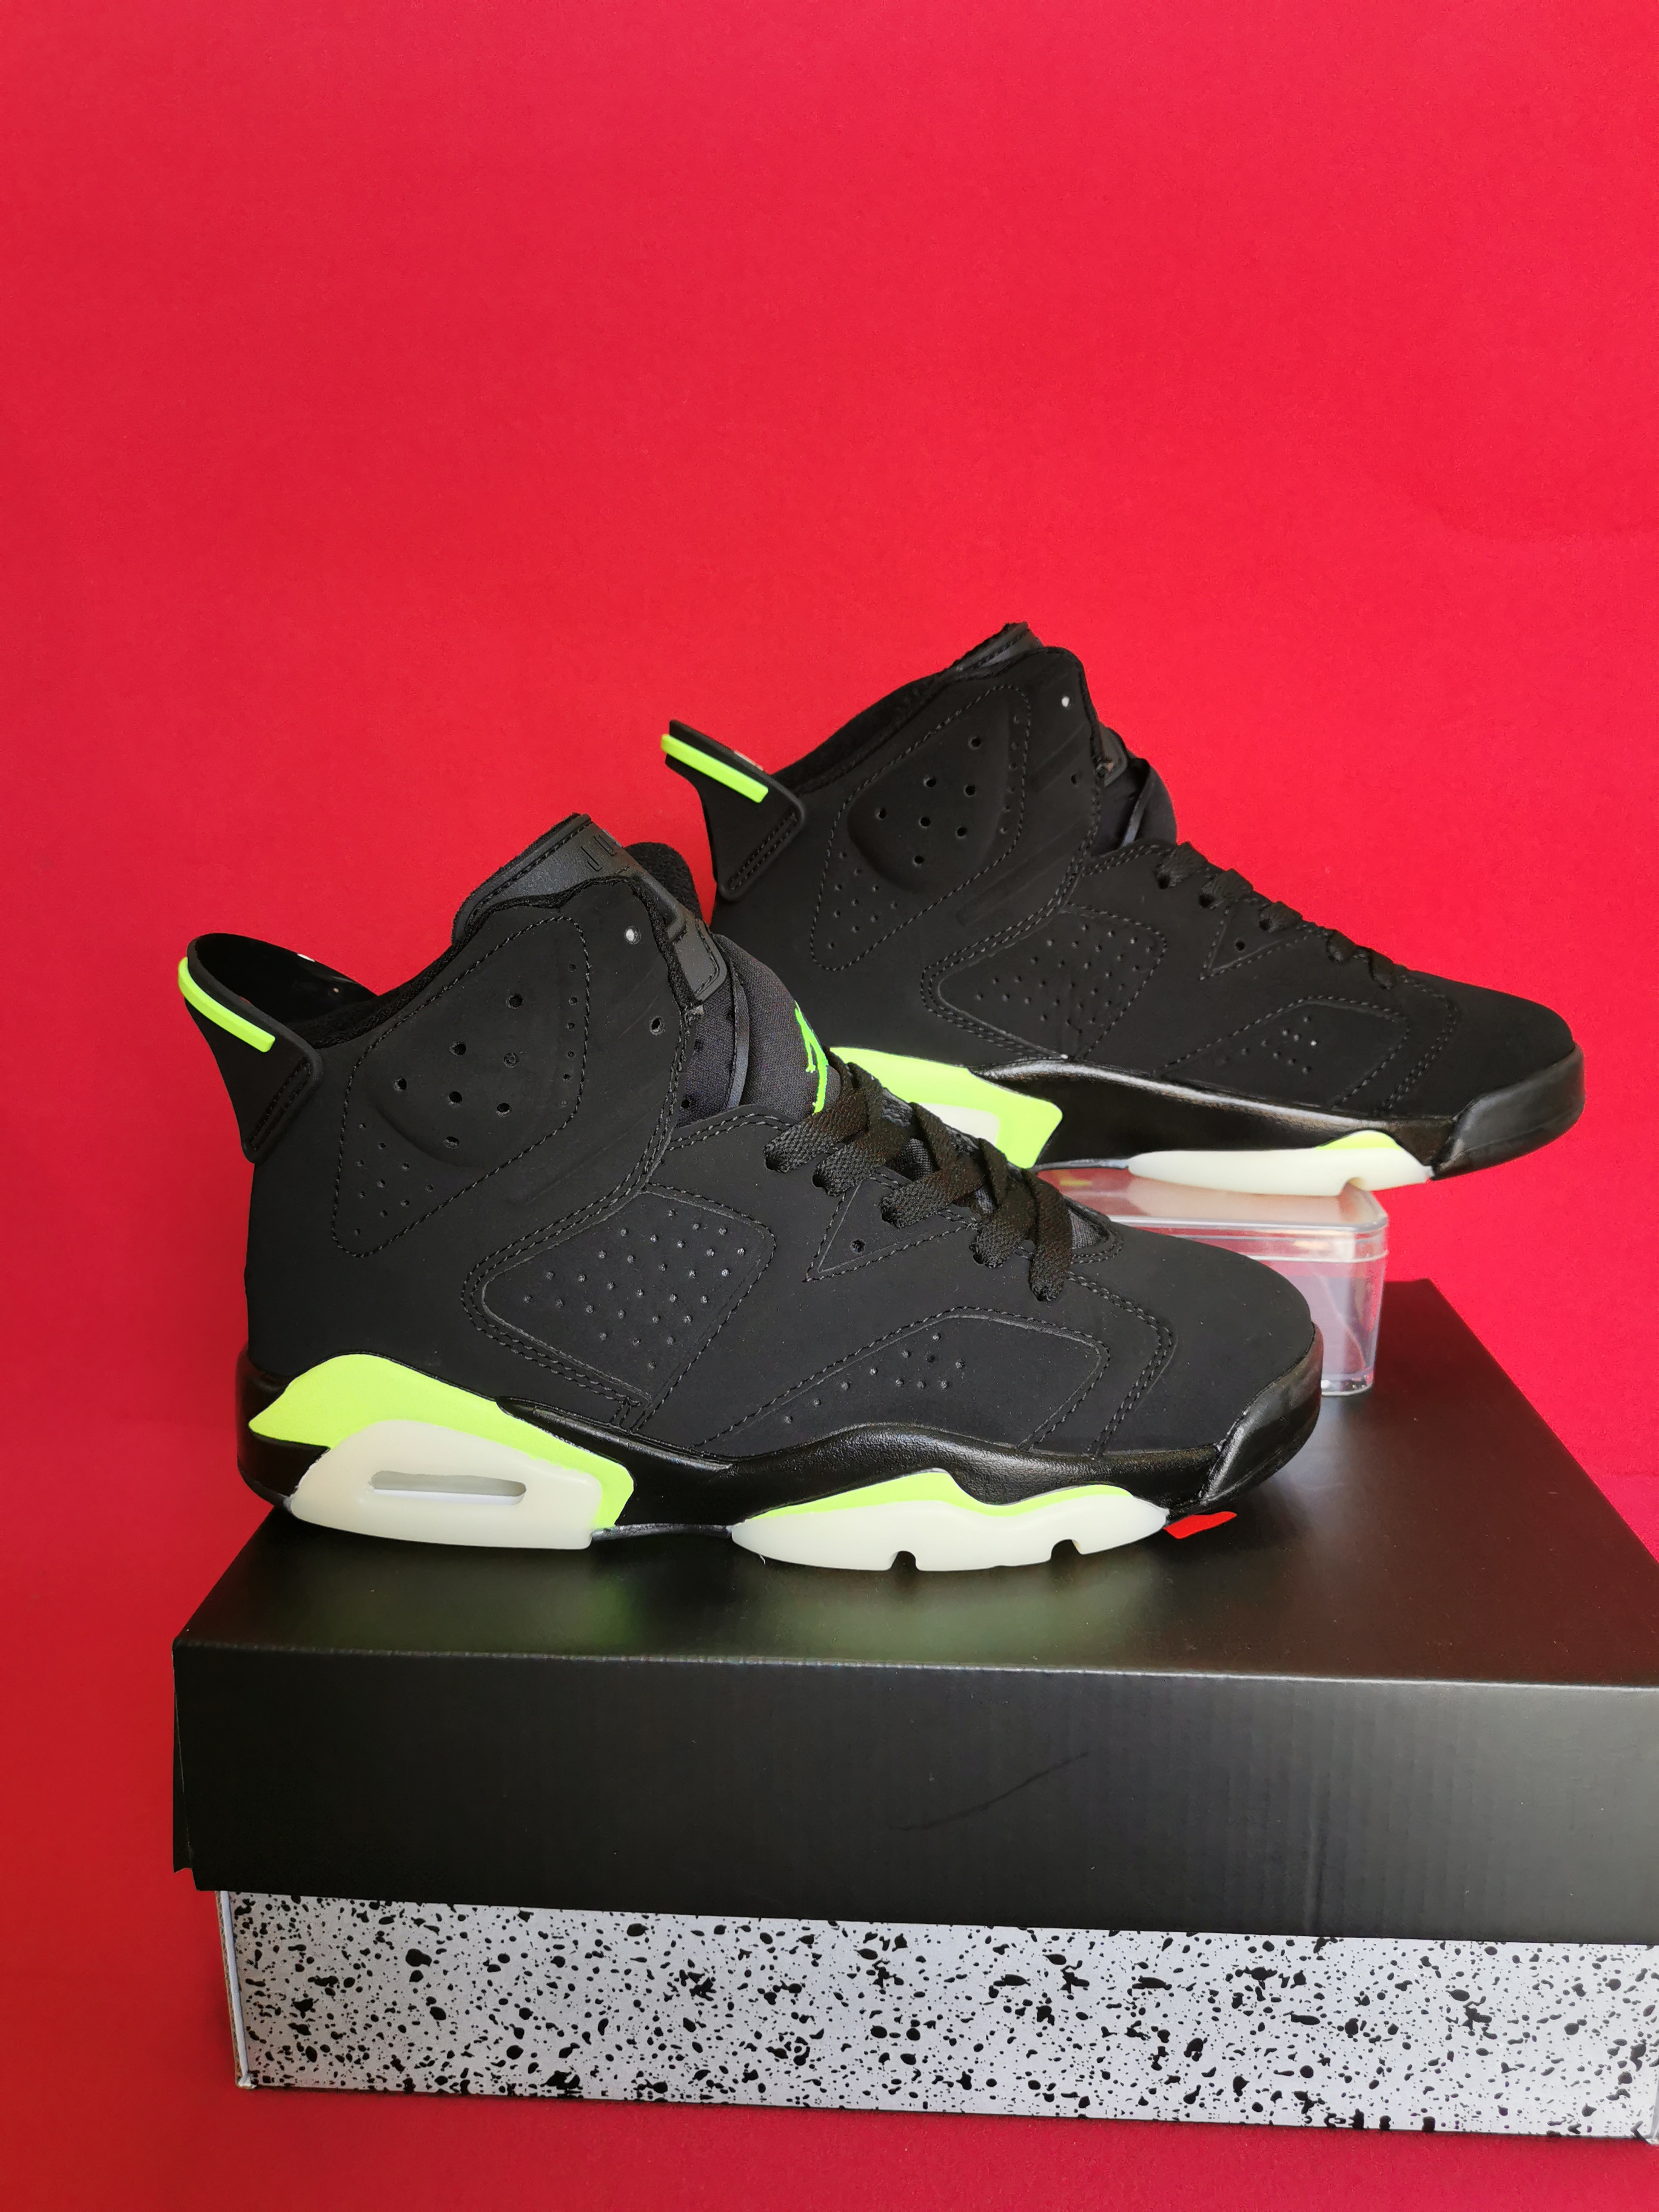 New Women Air Jordan 6 Black Fluorscent Shoes